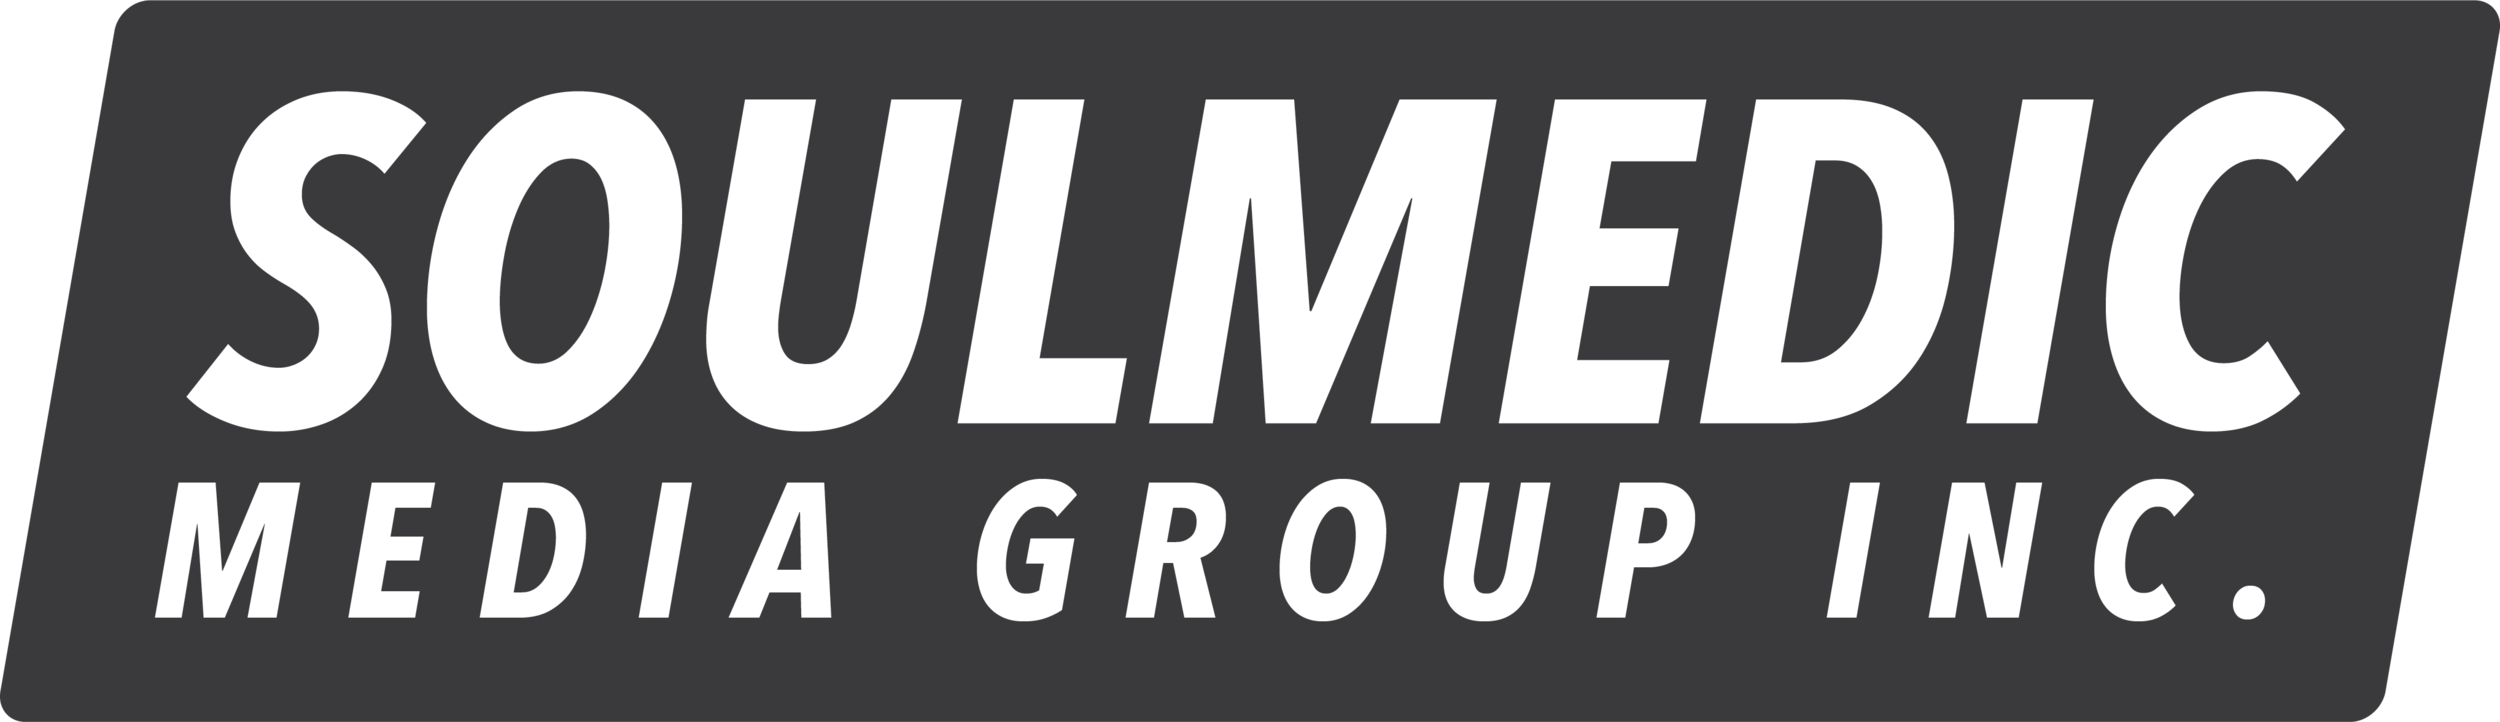 SoulMedic Media Group Inc.